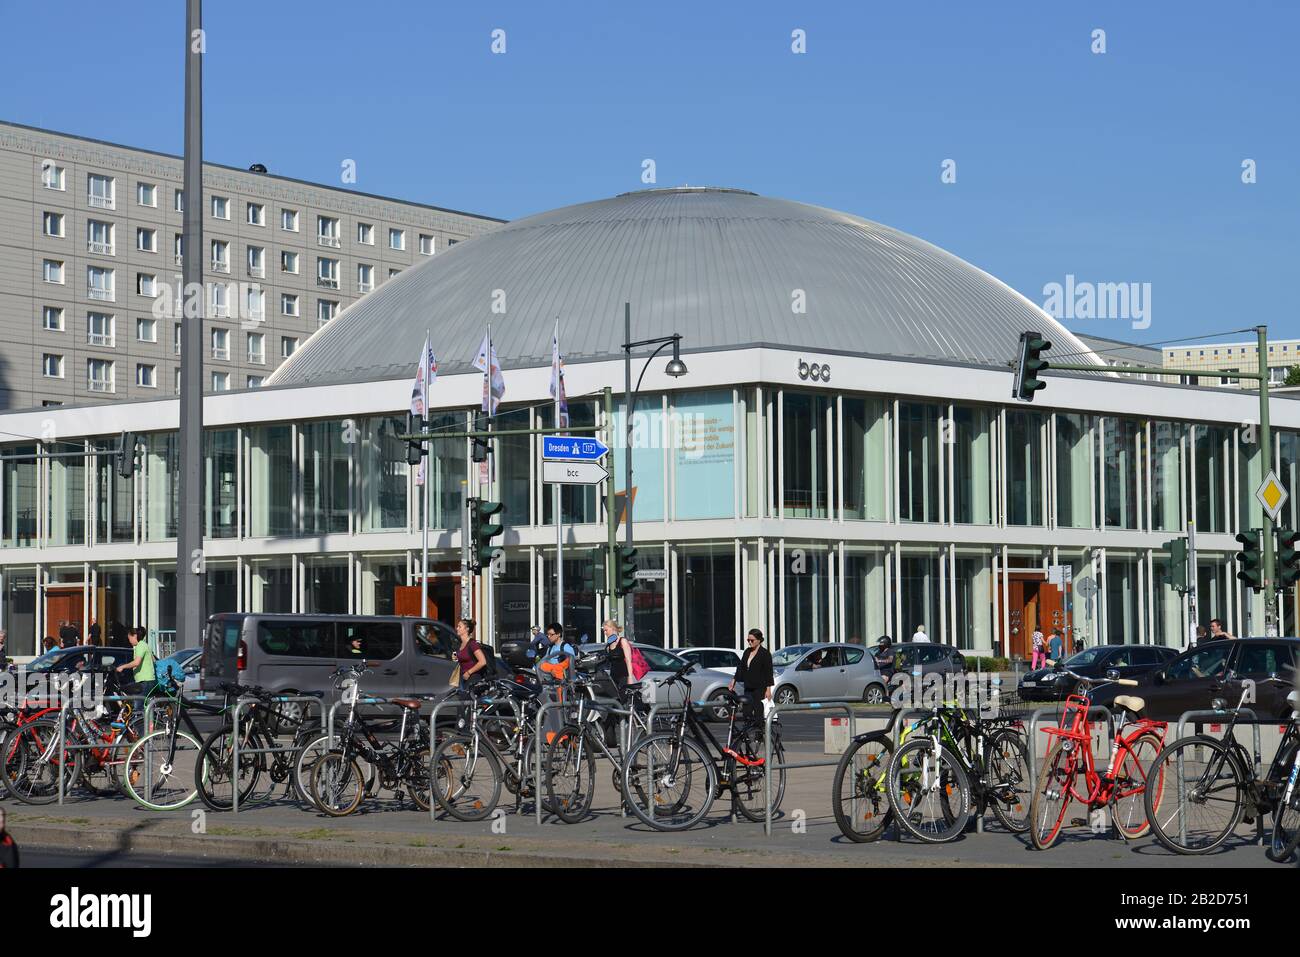 El Centro de Congresos de Berlín cco, Alexanderstrasse, Alexanderplatz, Mitte, Berlin, Deutschland Foto de stock